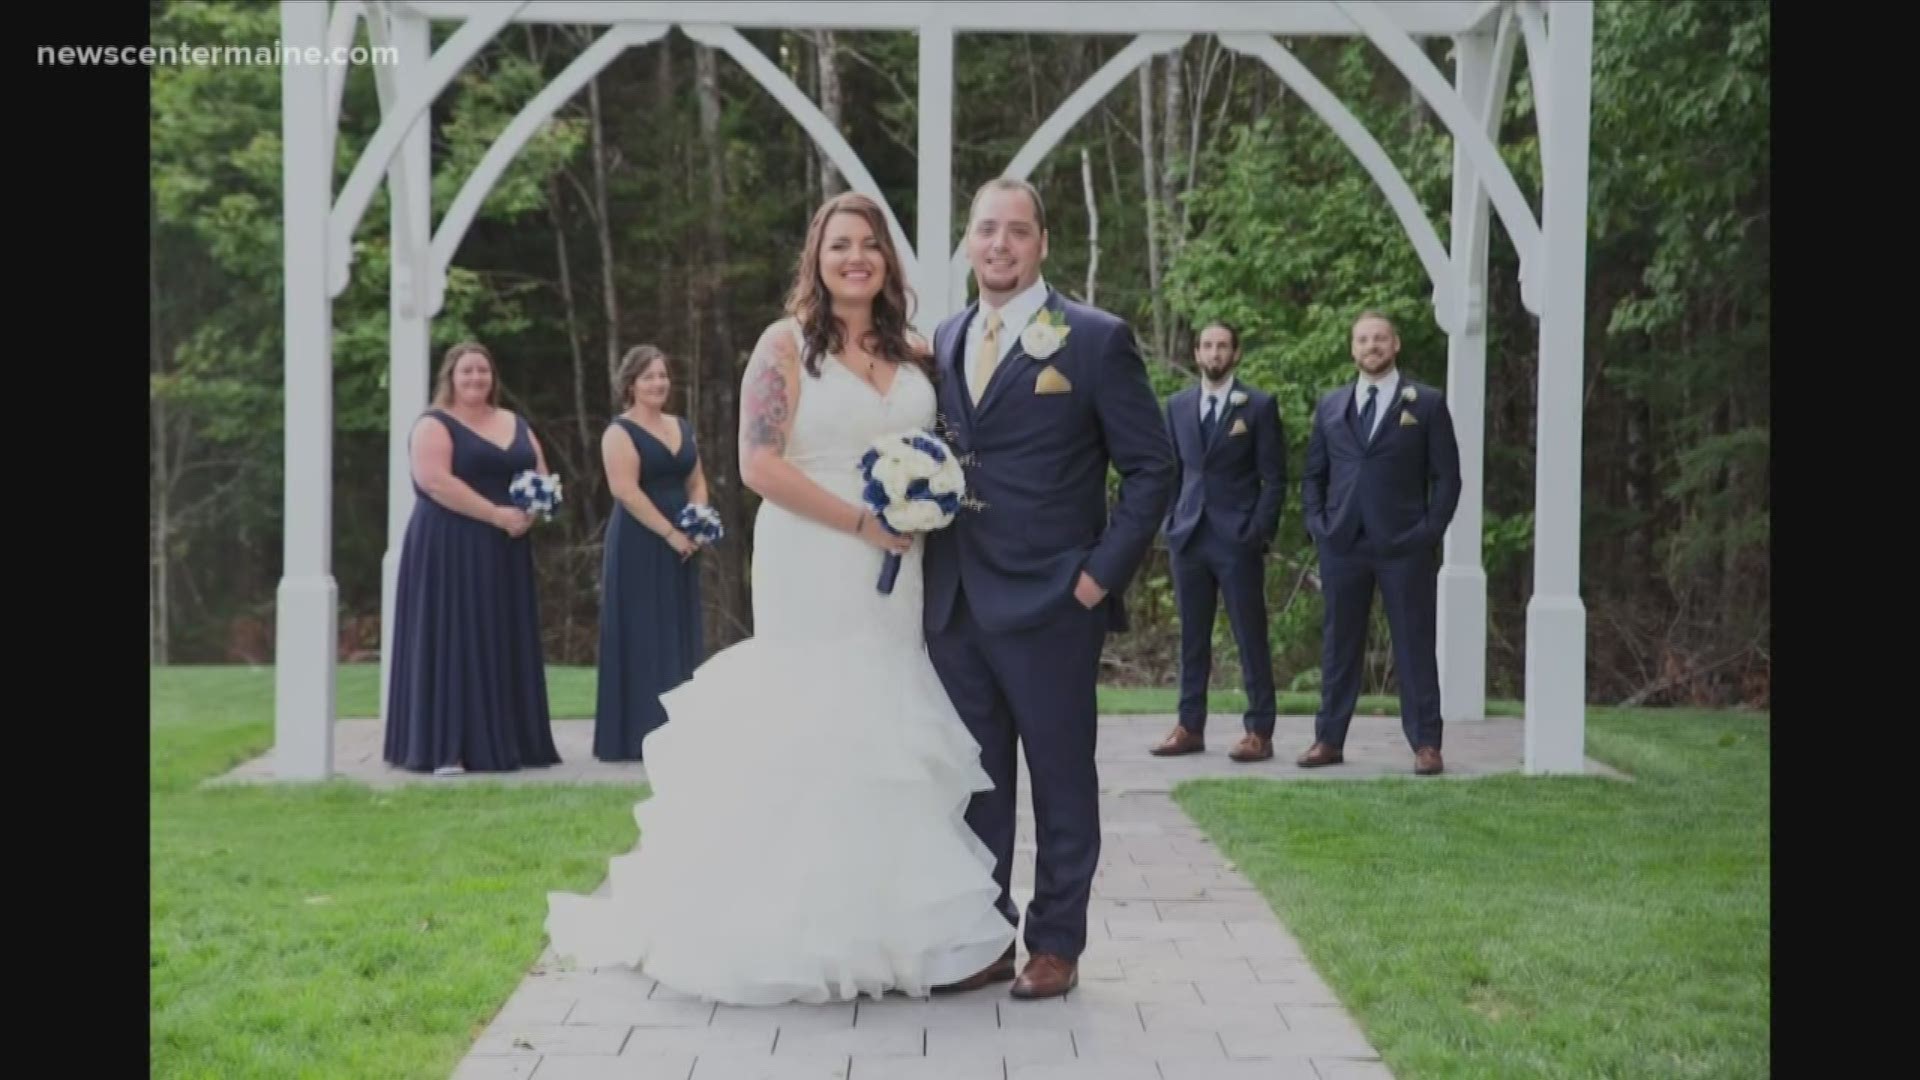 Wedding plans across Maine on hold due to coronavirus